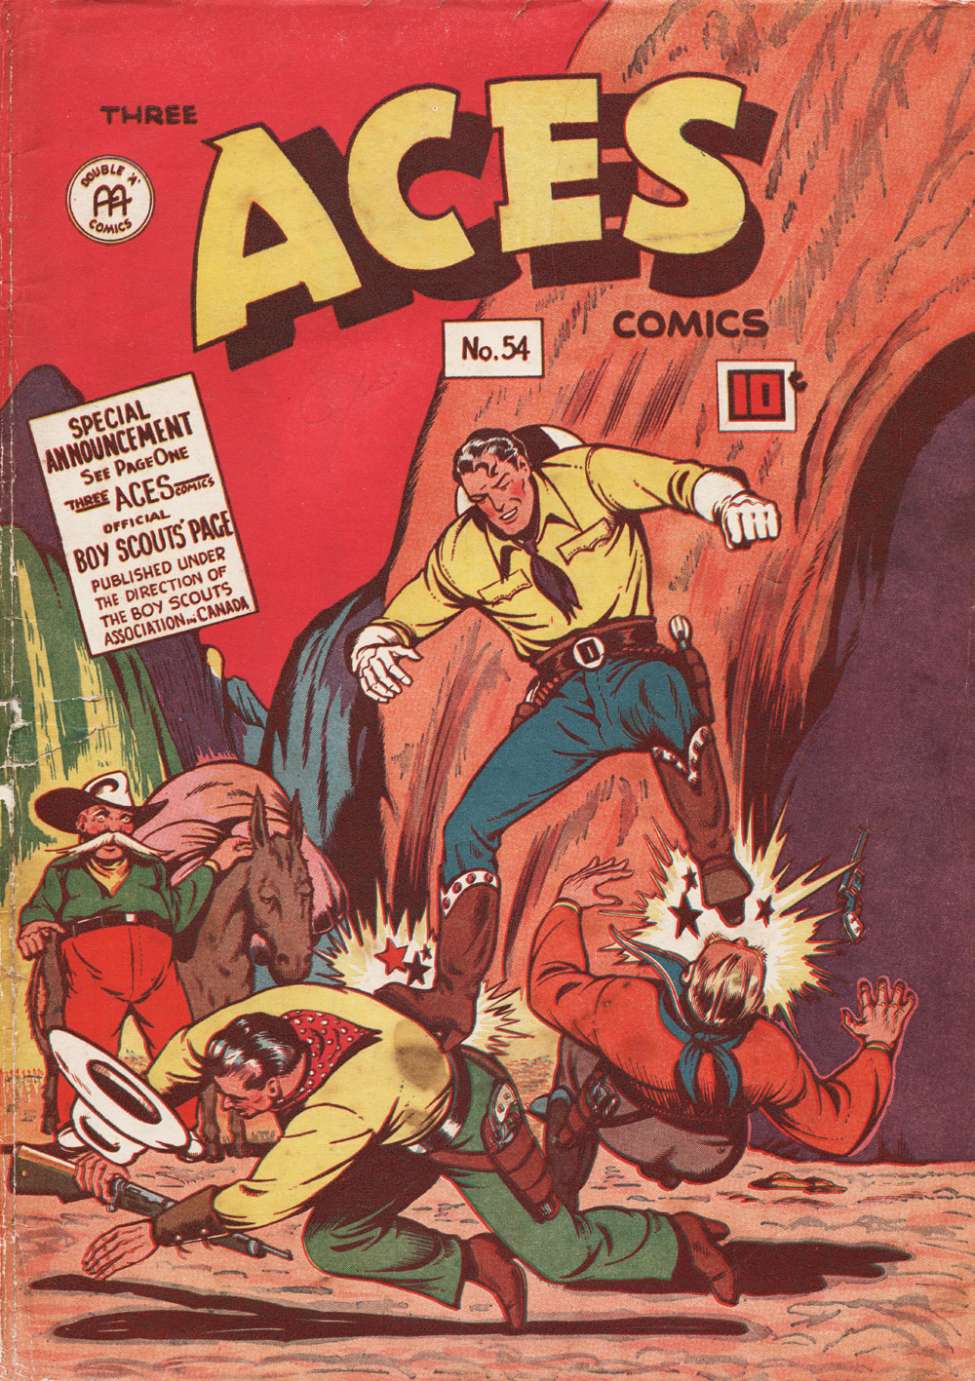 Comic Book Cover For Three Aces Comics v5 54